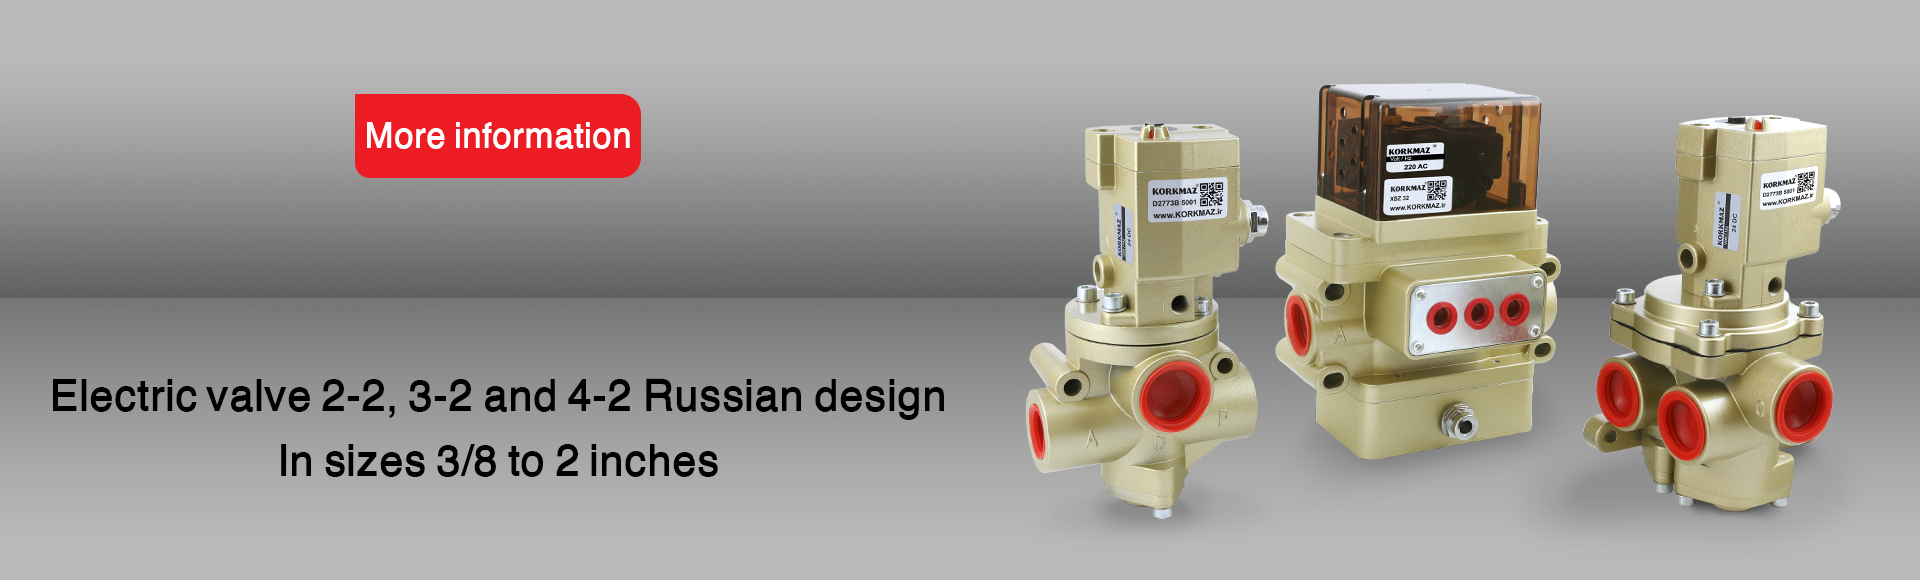 Pneumatic solenoid valve, ROSS solenoid valve, ROSS design solenoid valve, Russian solenoid valve, ROSS valve